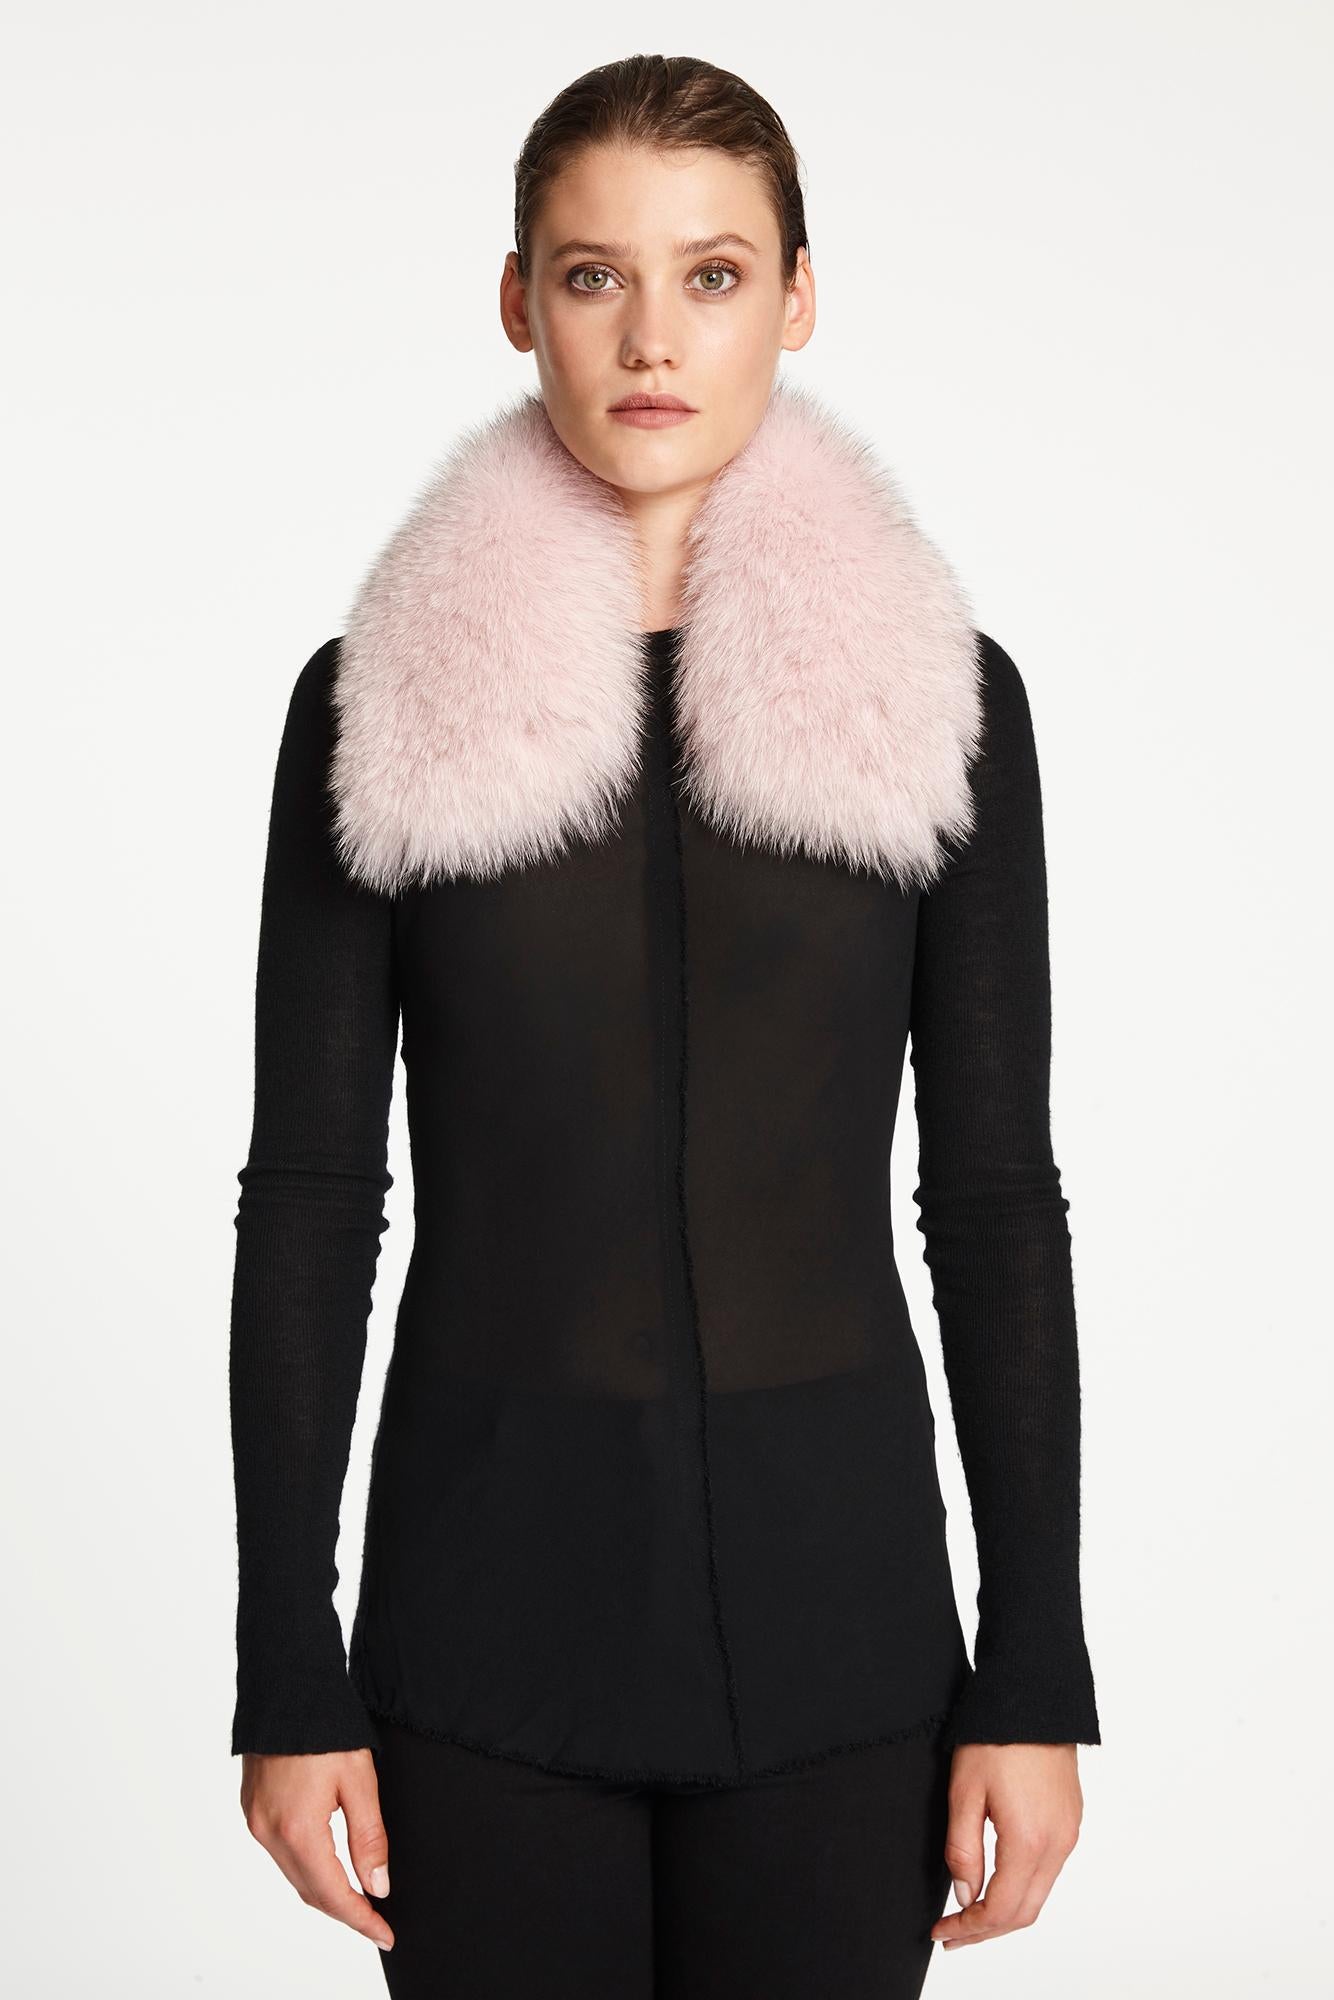 Verheyen London Peter Pan Collar in Pastel Rose Pink Fox Fur - Brand New  für Damen oder Herren